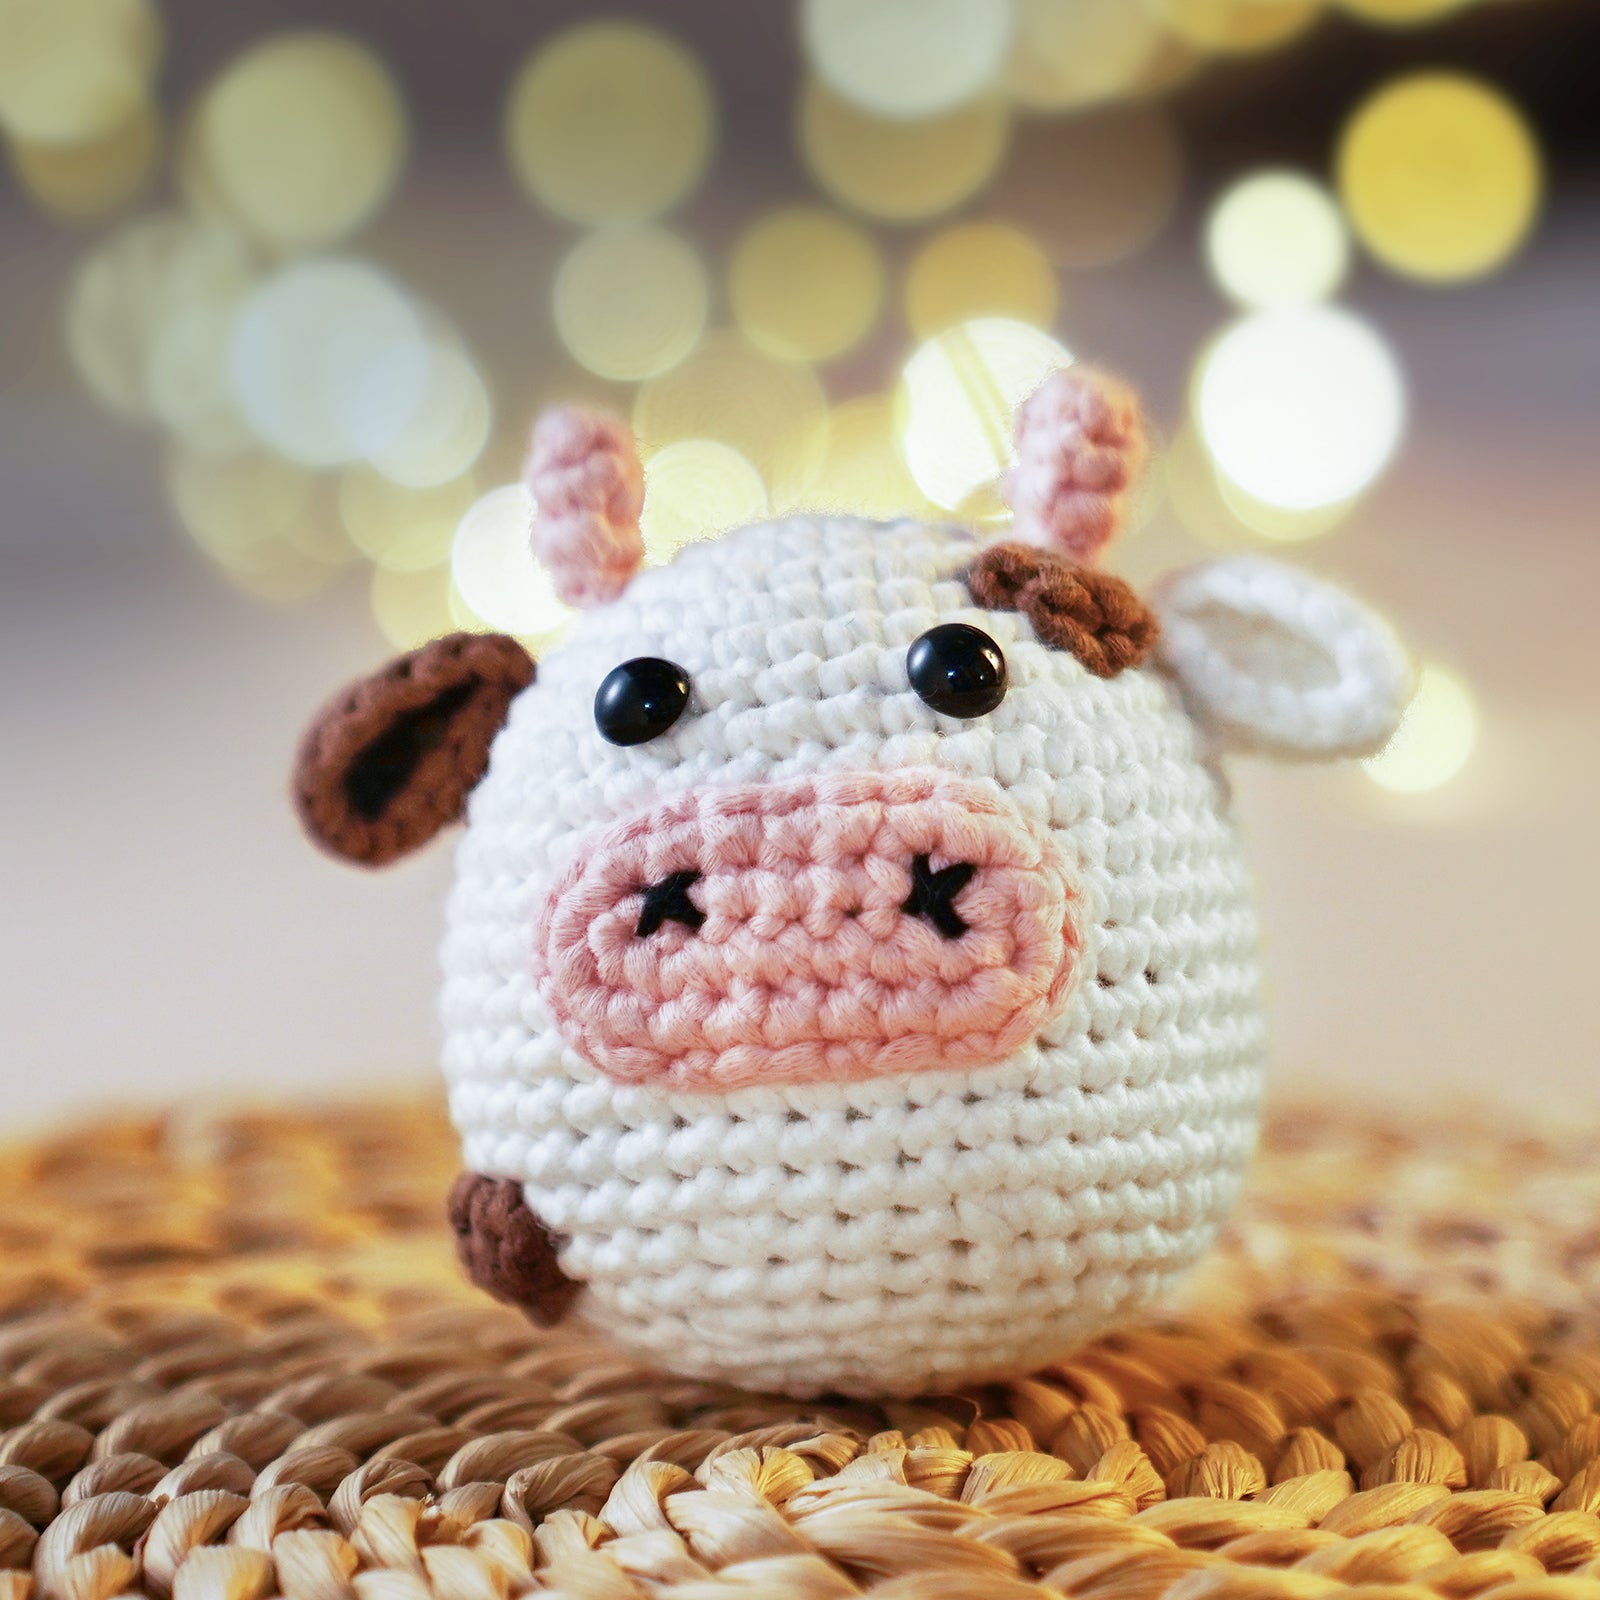 Beginner Starter Amigurumi Crochet Pig Craft Kit for Teens and Adults 